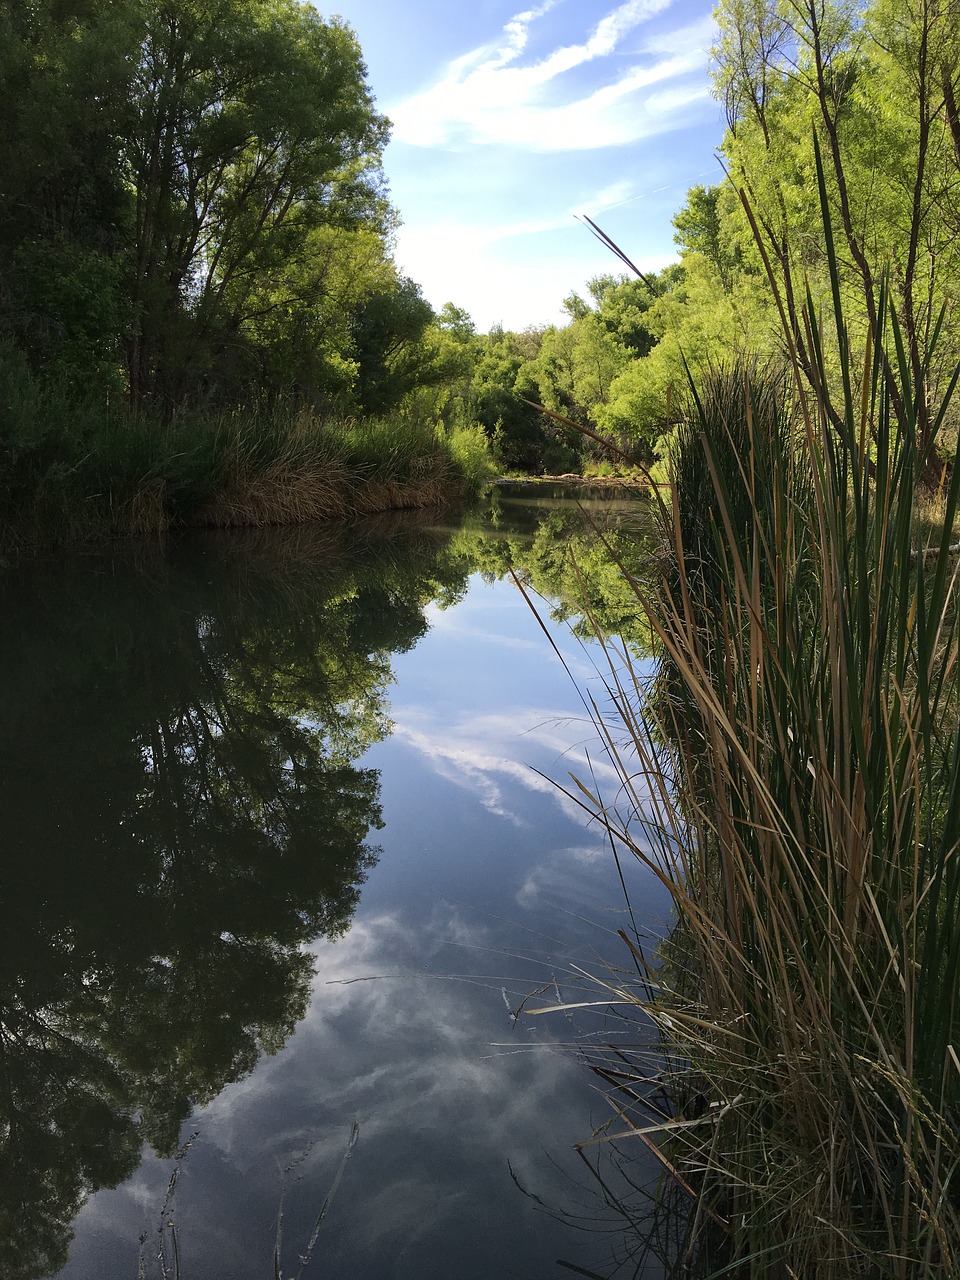 Verde Upės,  Cottonwood Arizona,  Dangus,  Upė,  Atspindys, Nemokamos Nuotraukos,  Nemokama Licenzija